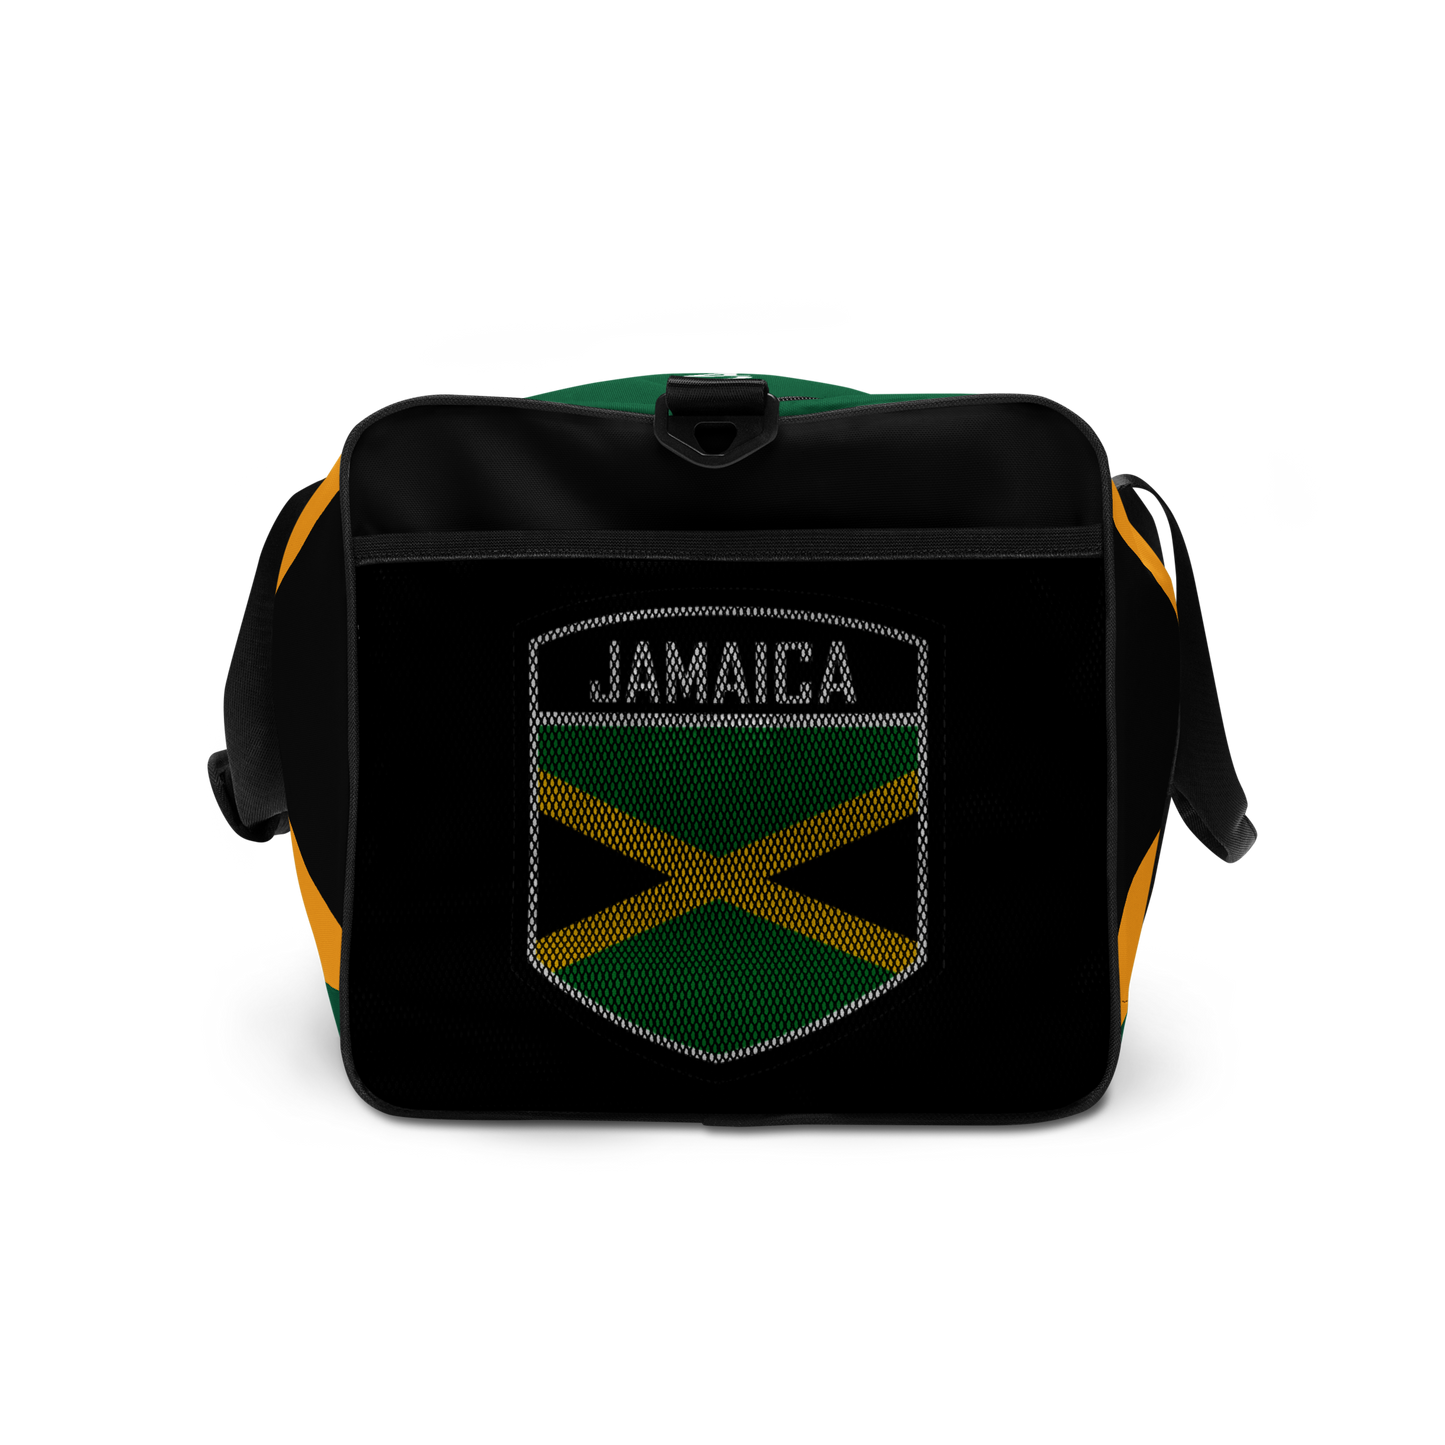 Jamaica Duffle bag